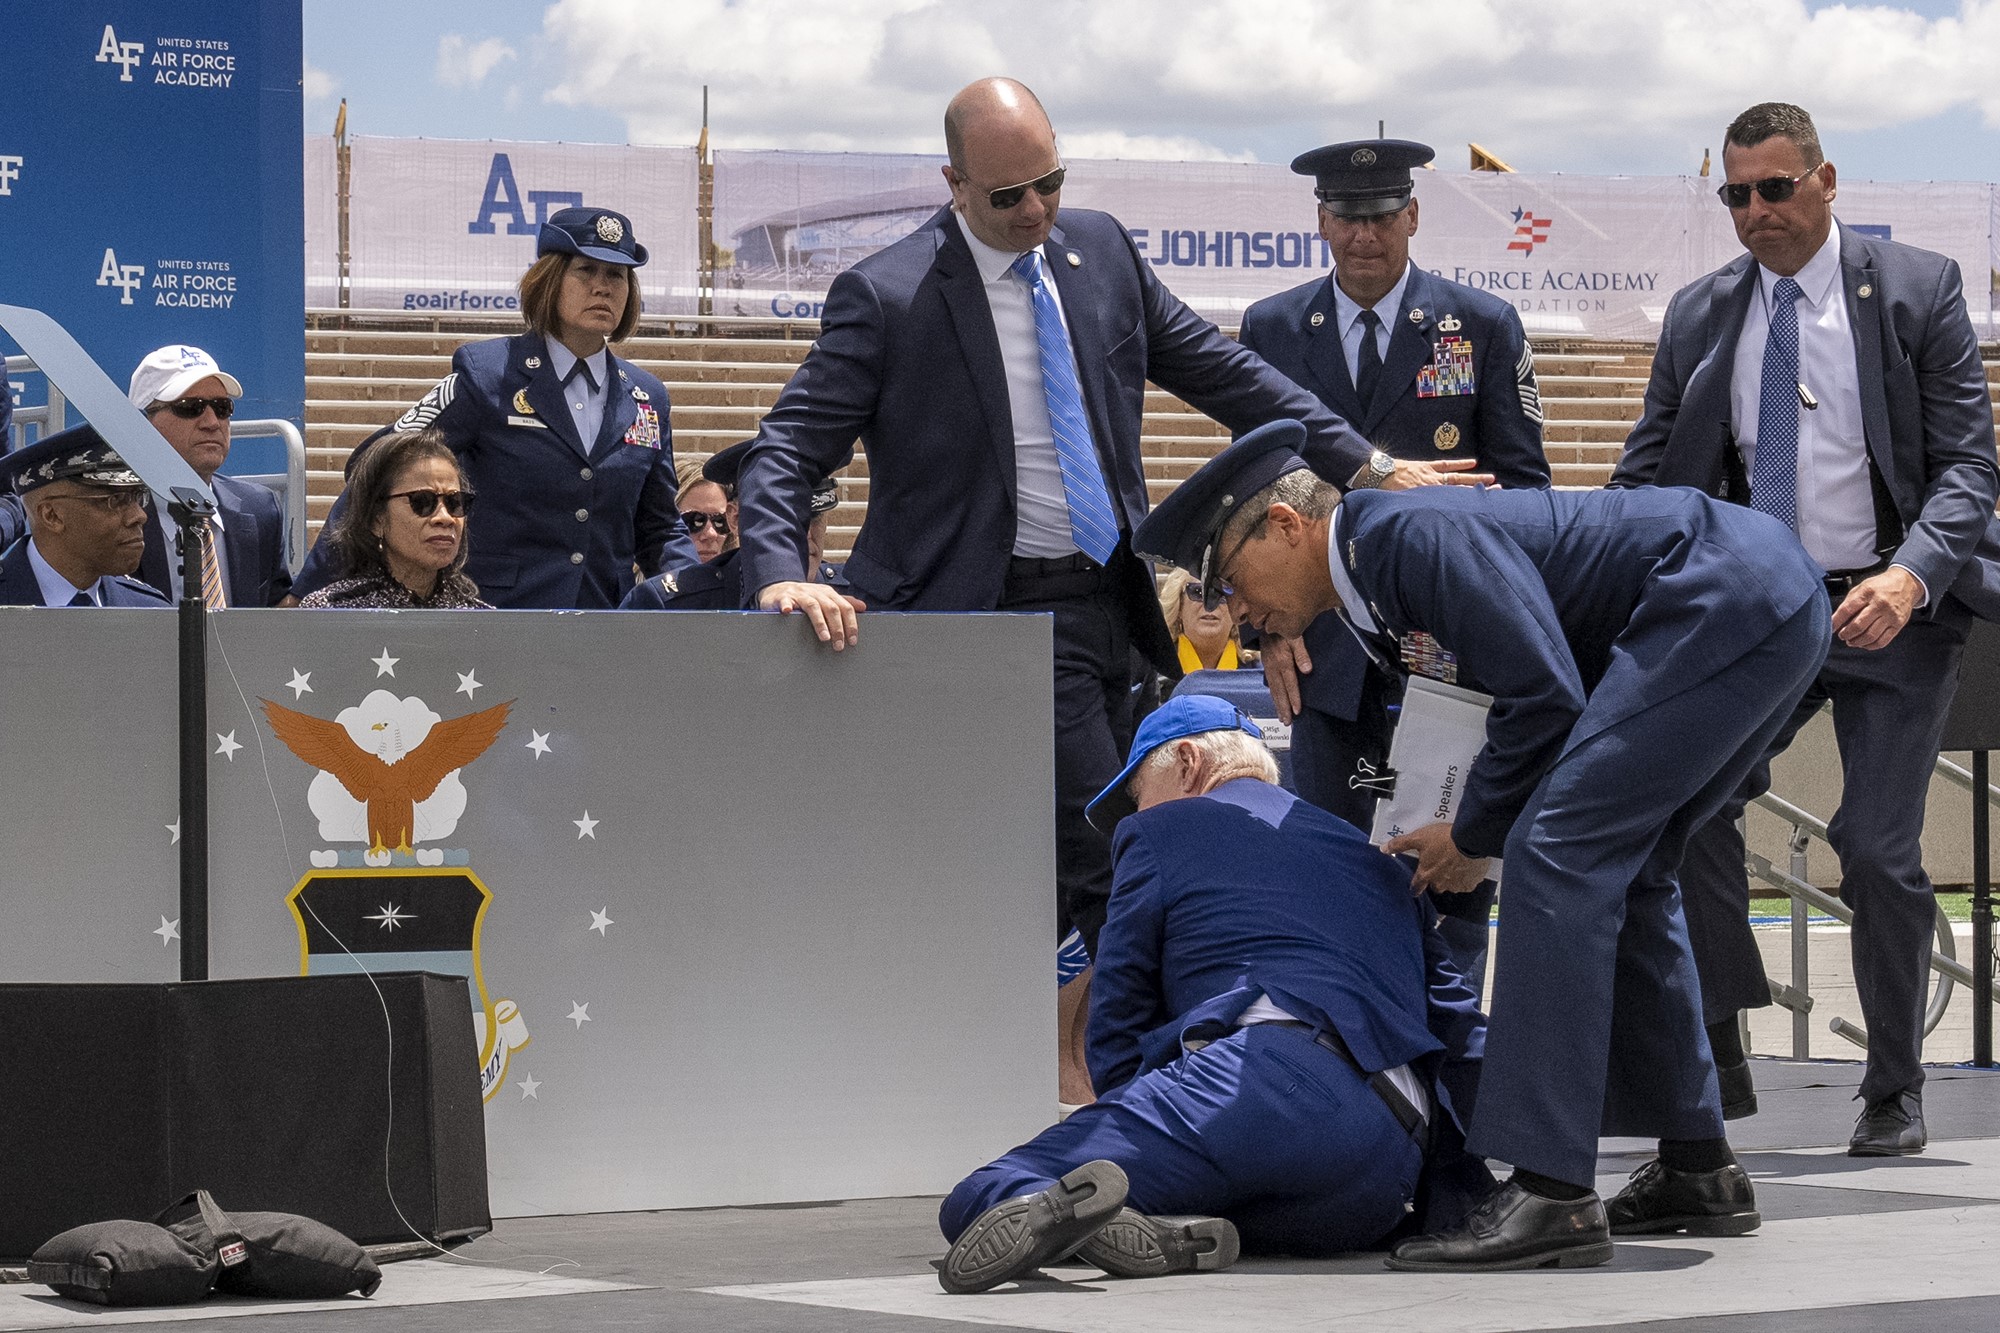 Joe Biden lies slightly on the ground of a stage, as officials crowd around him